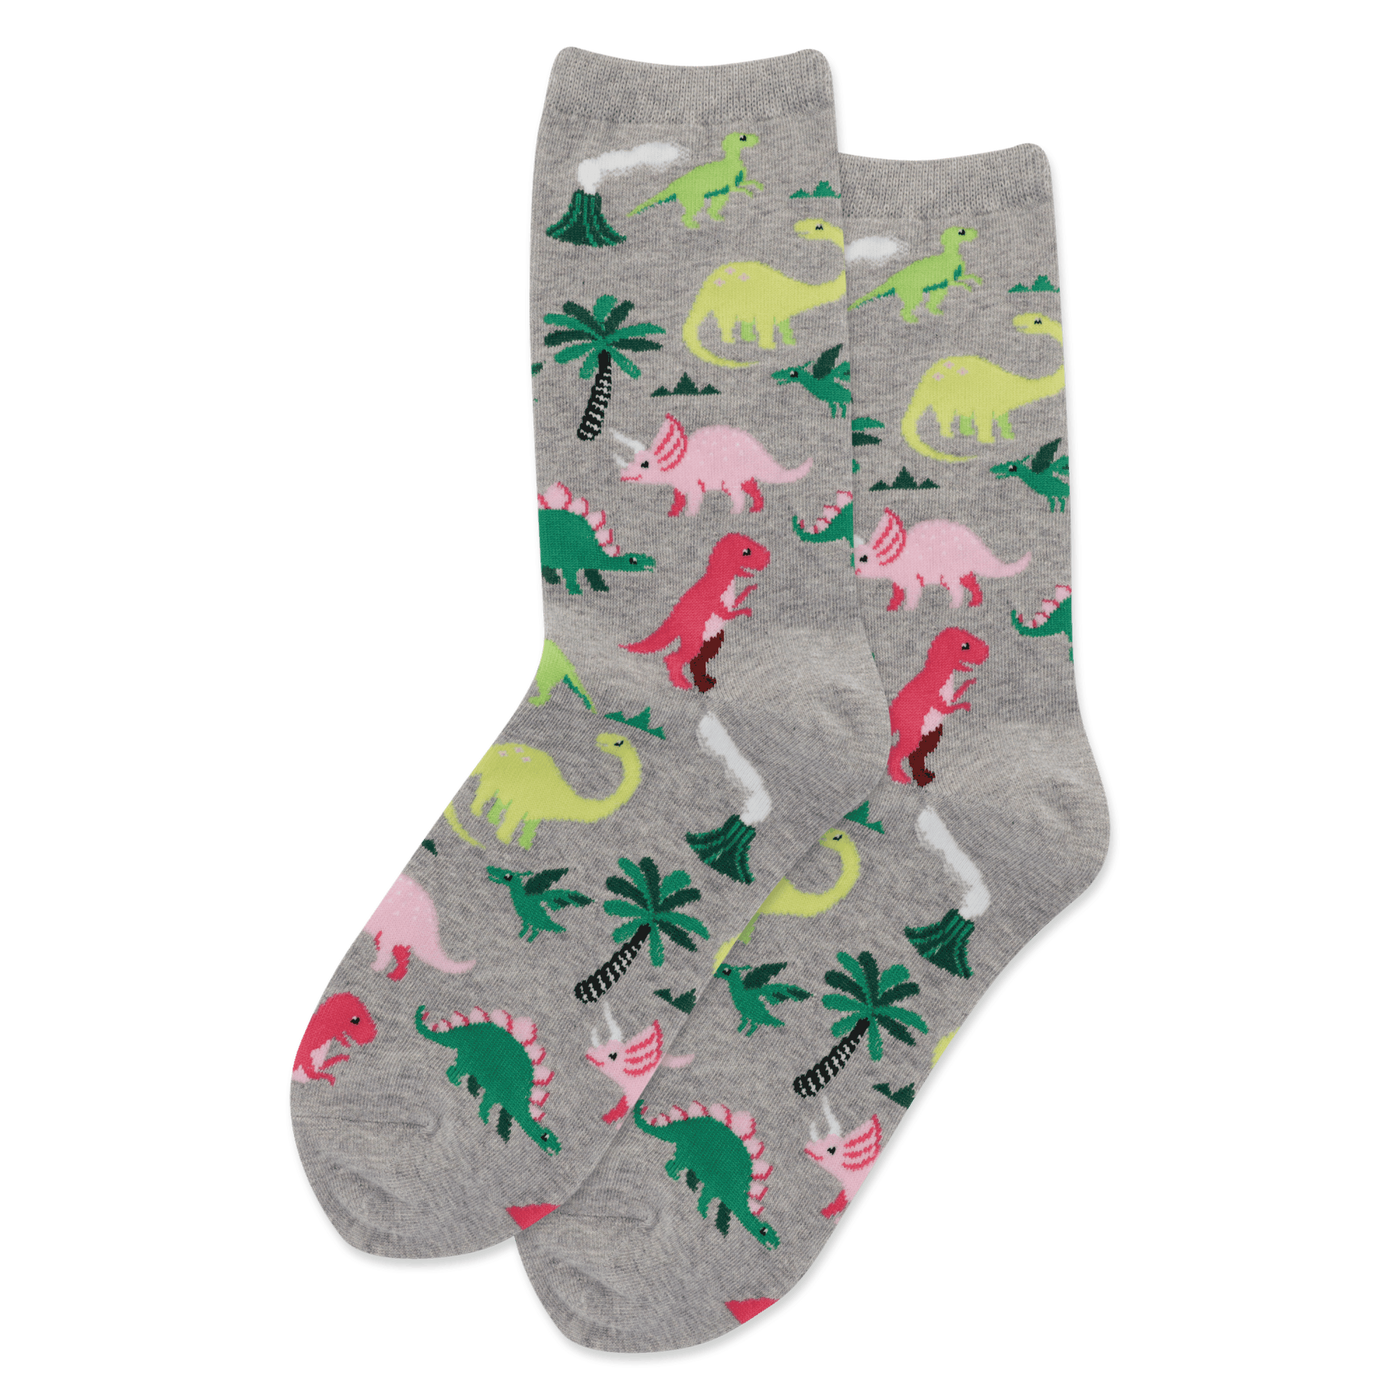 "Dinosaurs" Cotton Crew Socks by Hot Sox